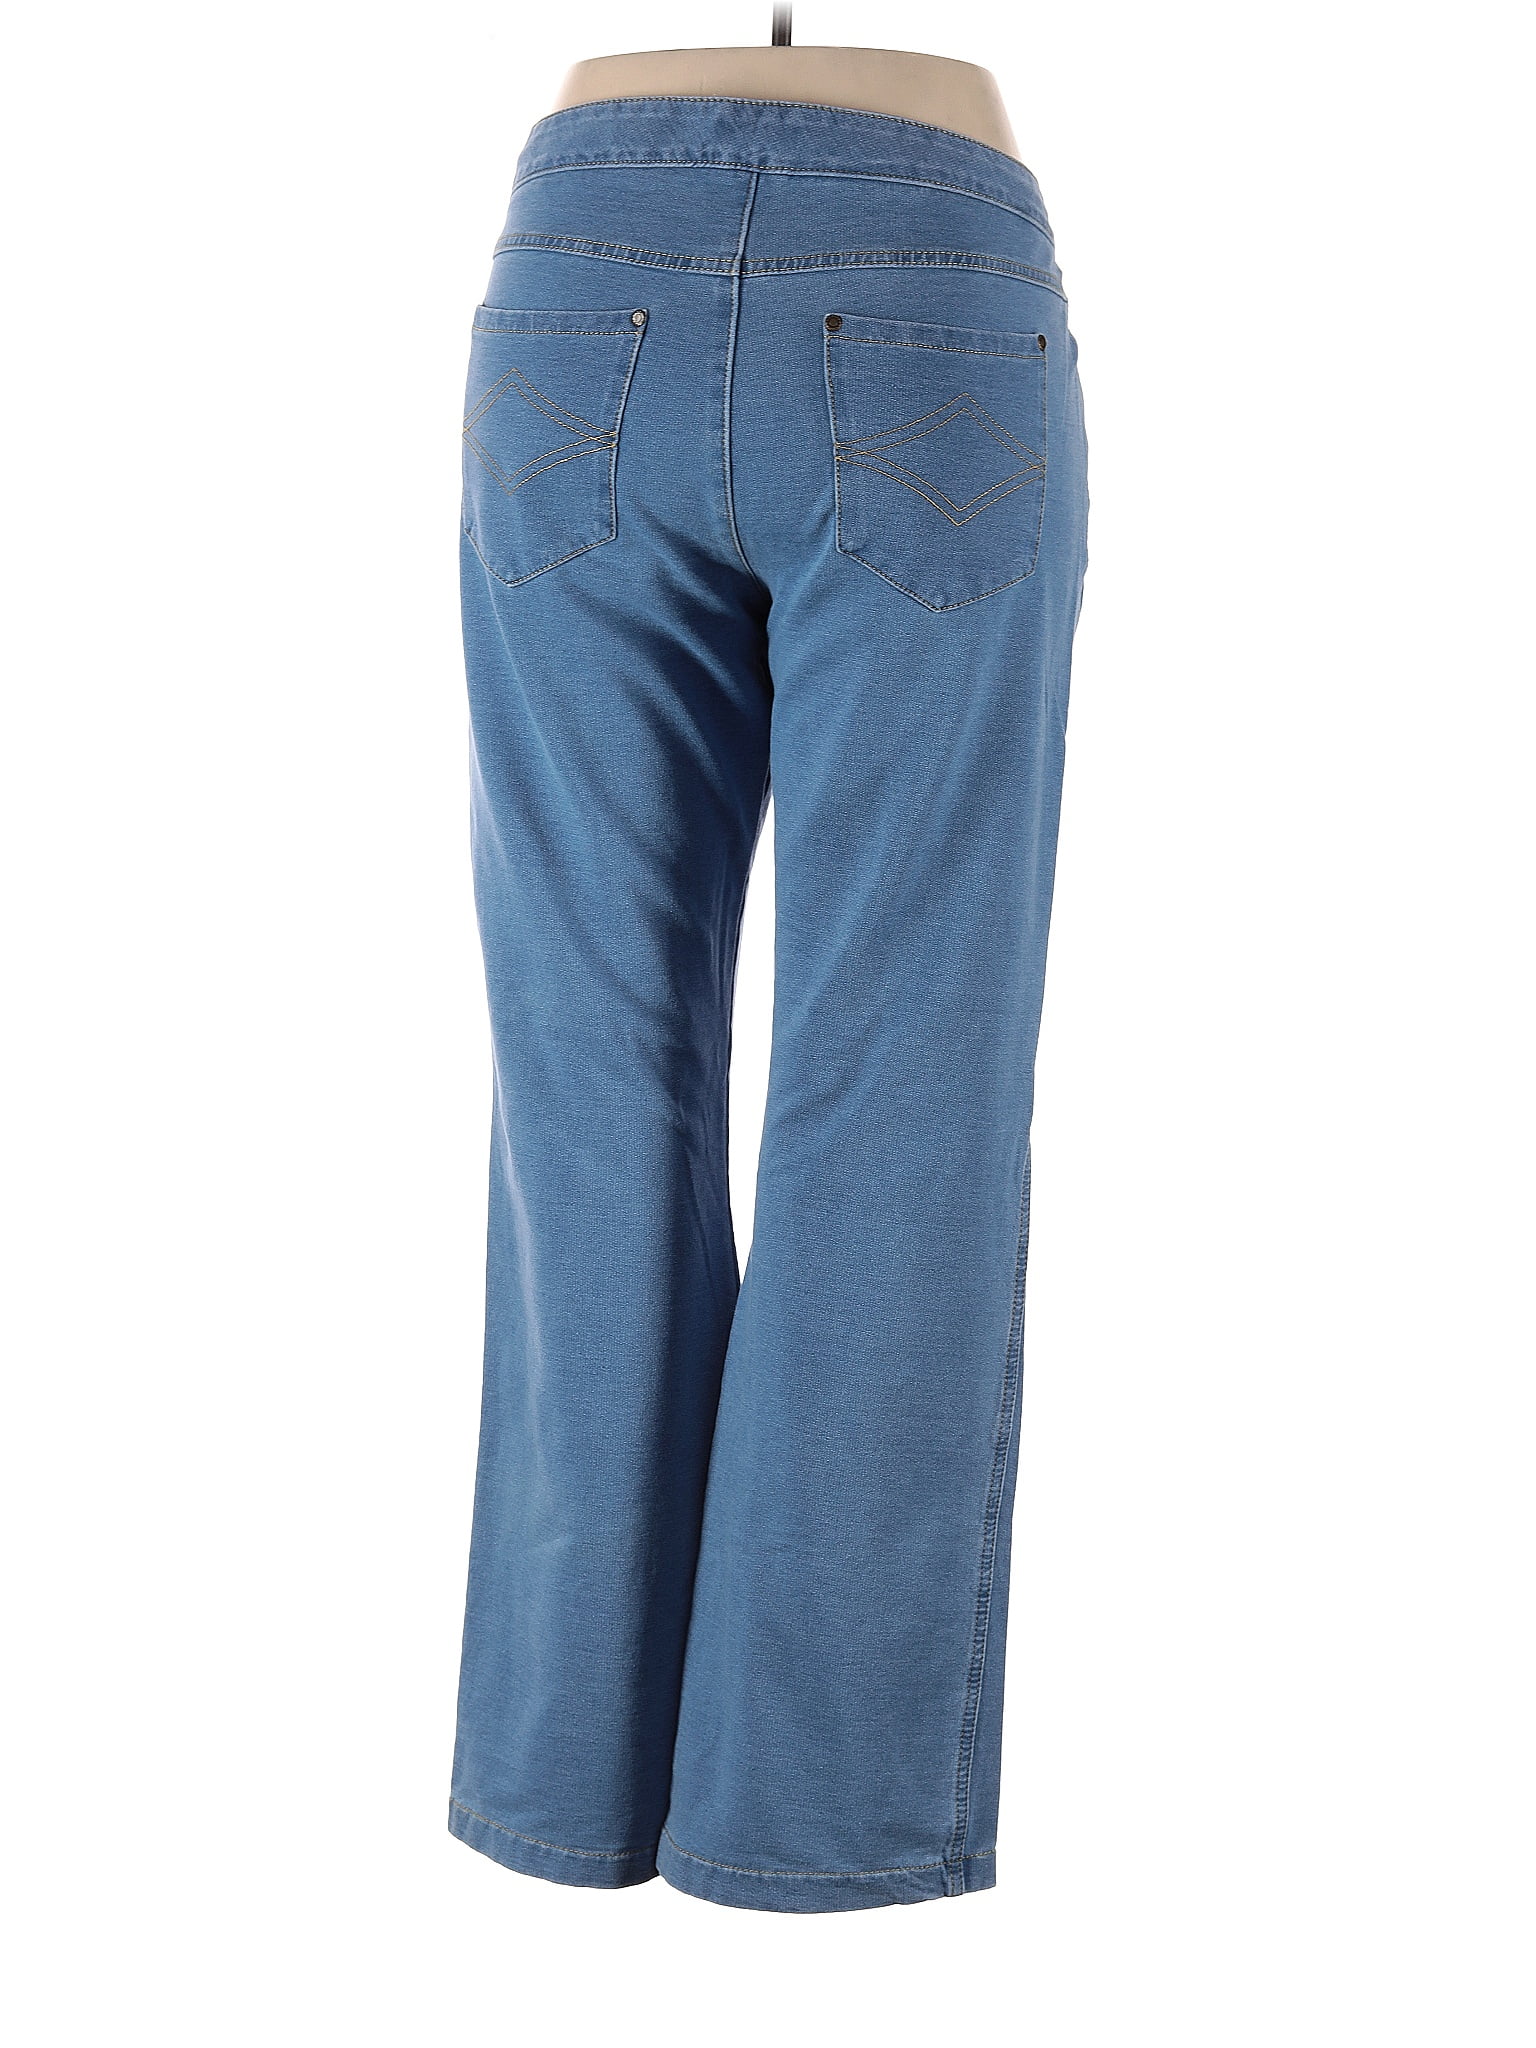 PajamaJeans® High-Waist Skinny Jeans in Women's Jeggings & Denim